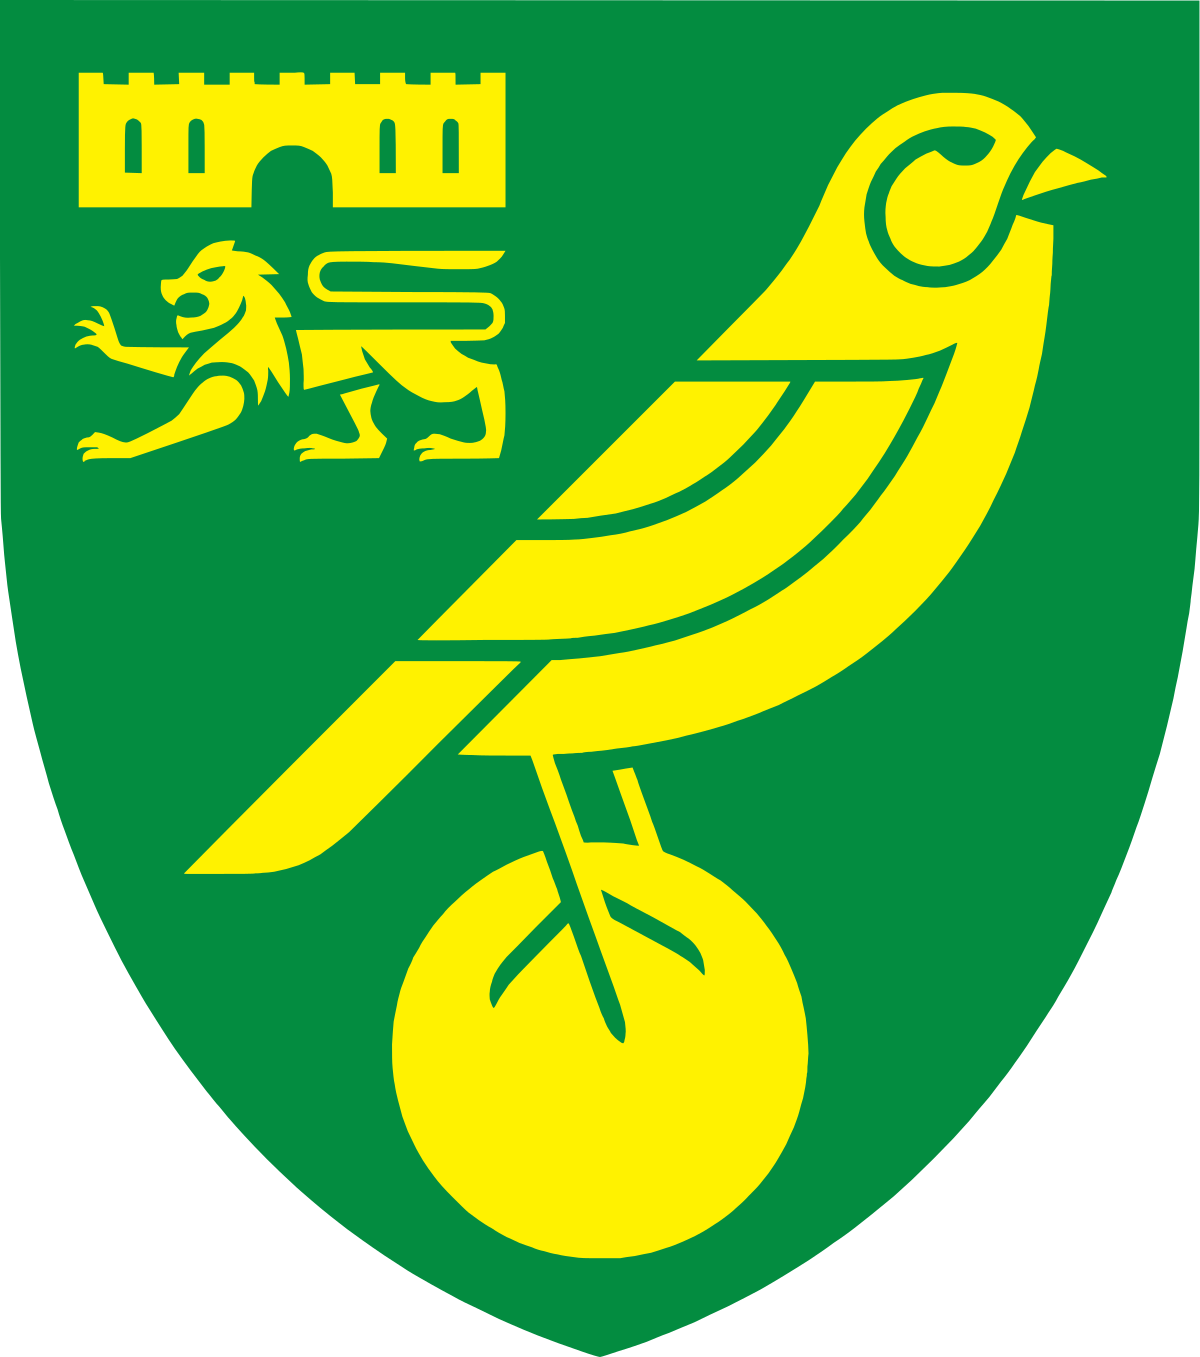 Norwich City Club Crest